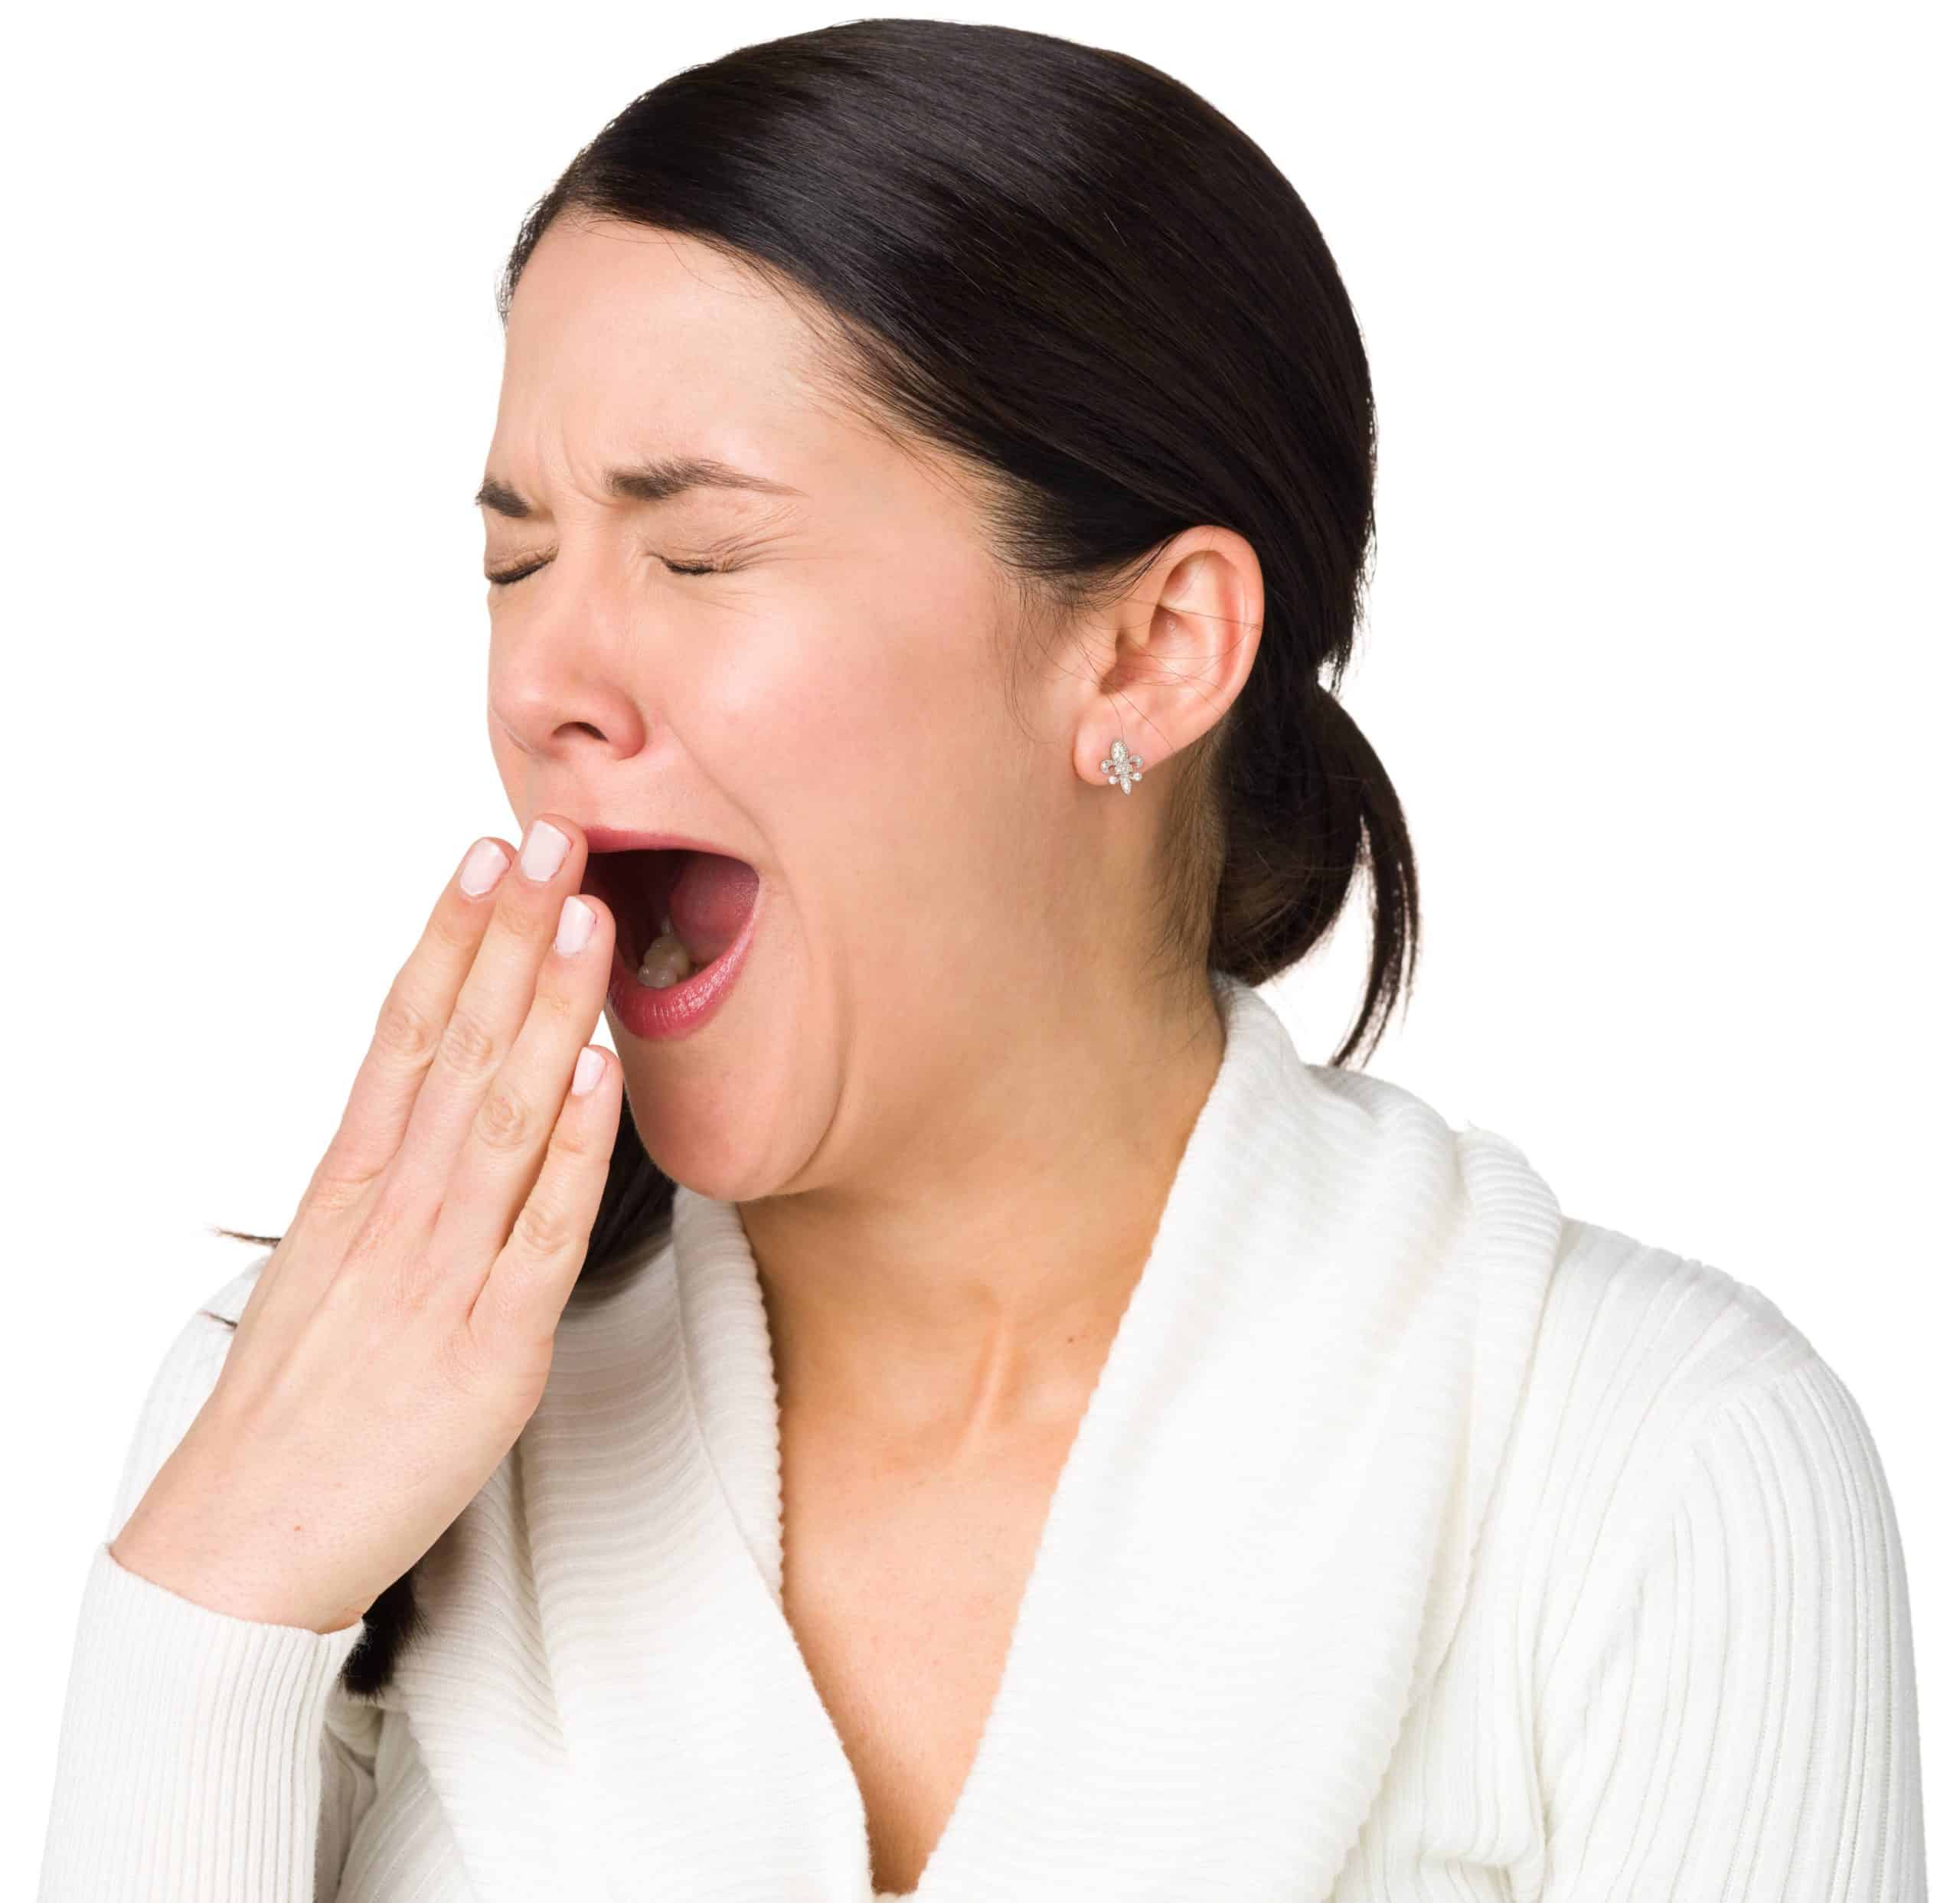 woman with sleep apnea yawning